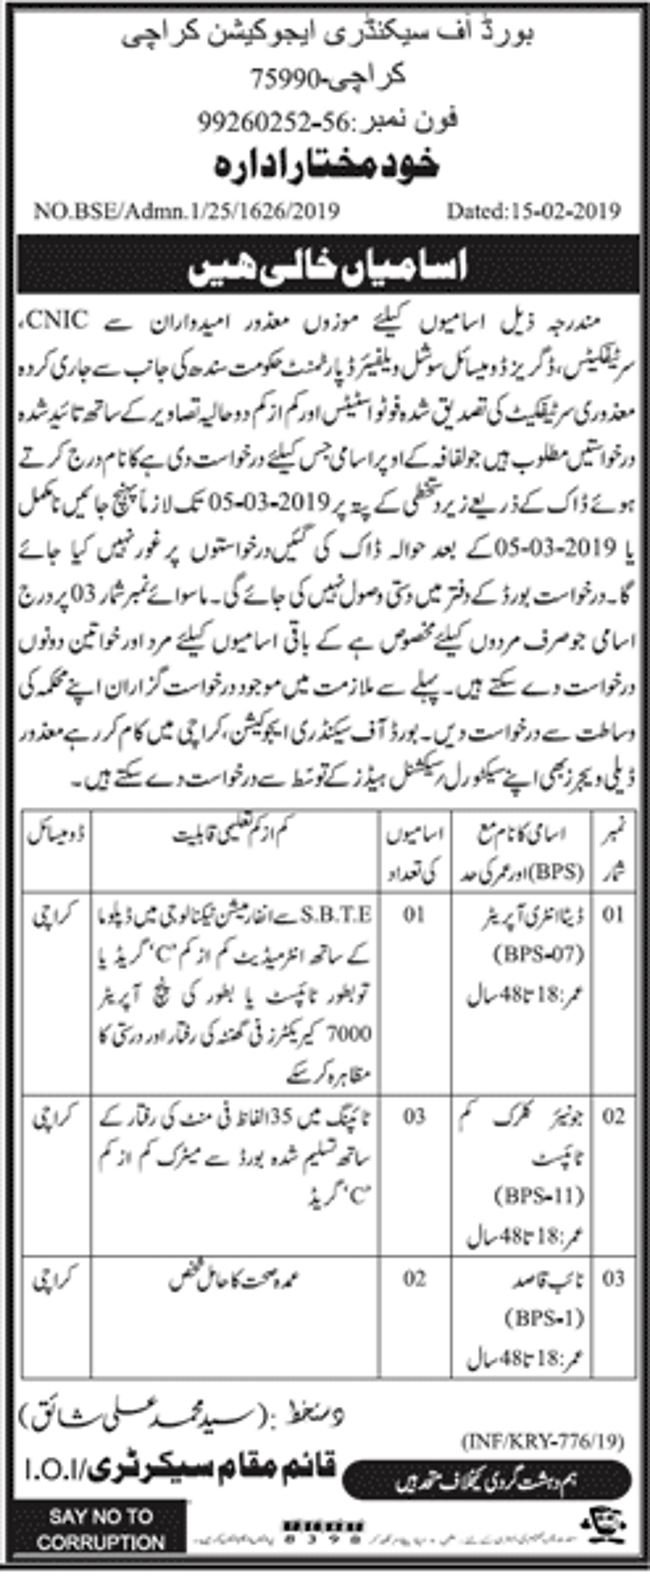 Board of Secondary Education Karachi (BSEK) Jobs 2019 for 6+ Jr Clerks, Typist, DEO and Naib Qasid Posts